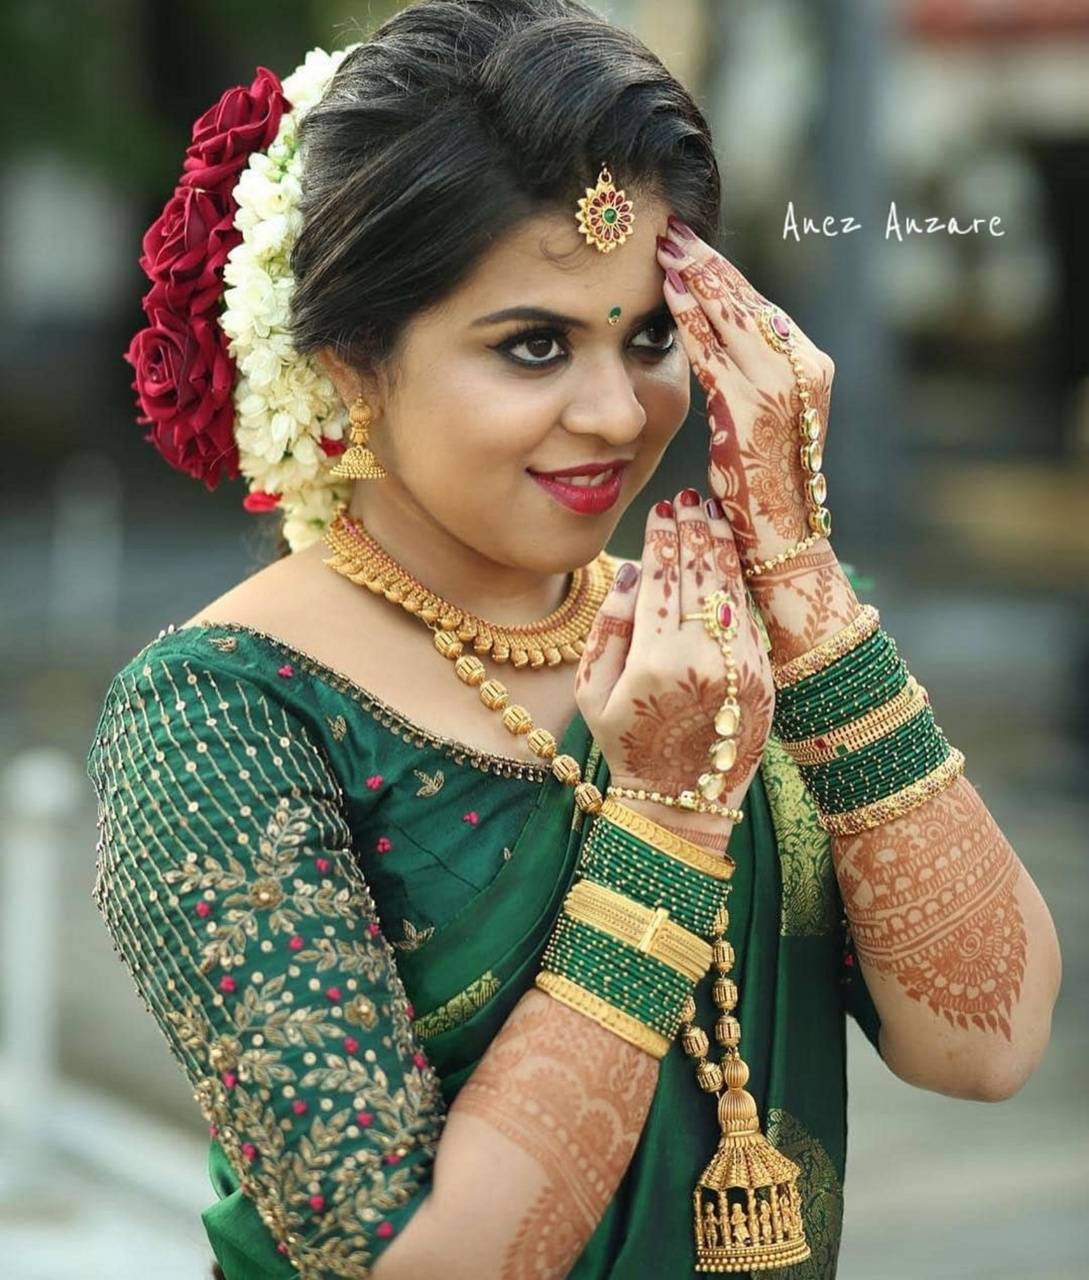 The Kerala Bride — What Makes Her Unique?